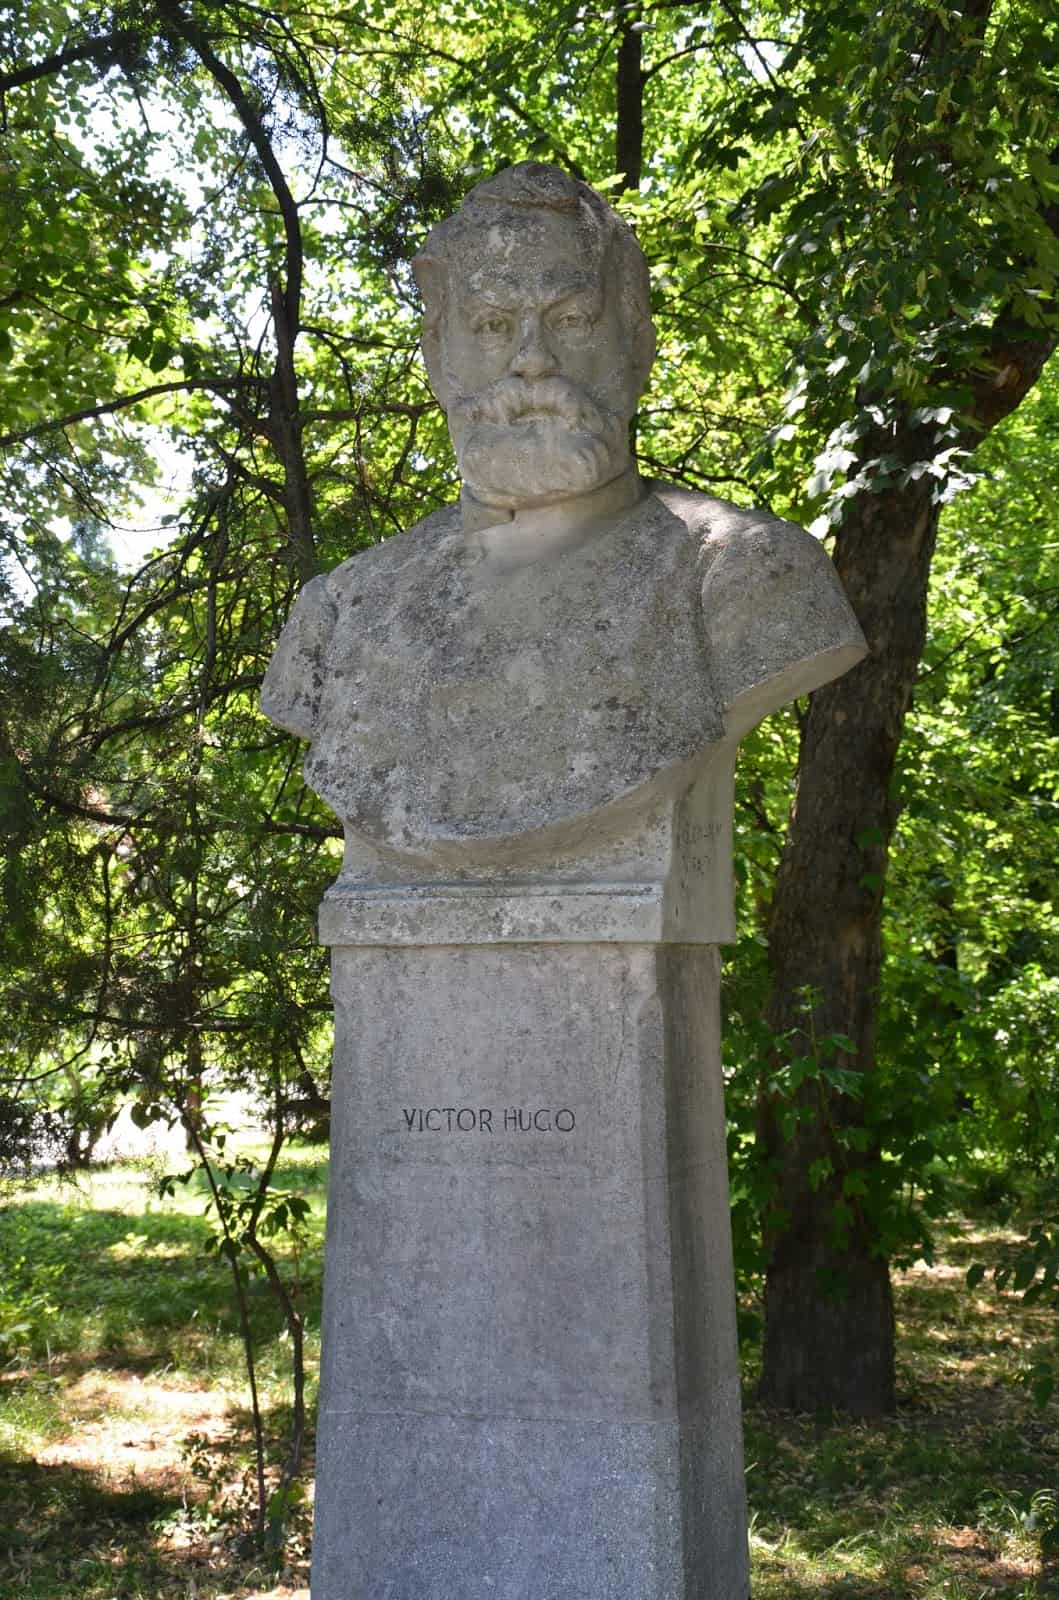 Bust of Victor Hugo at Parcul Herăstrău in Bucharest, Romania